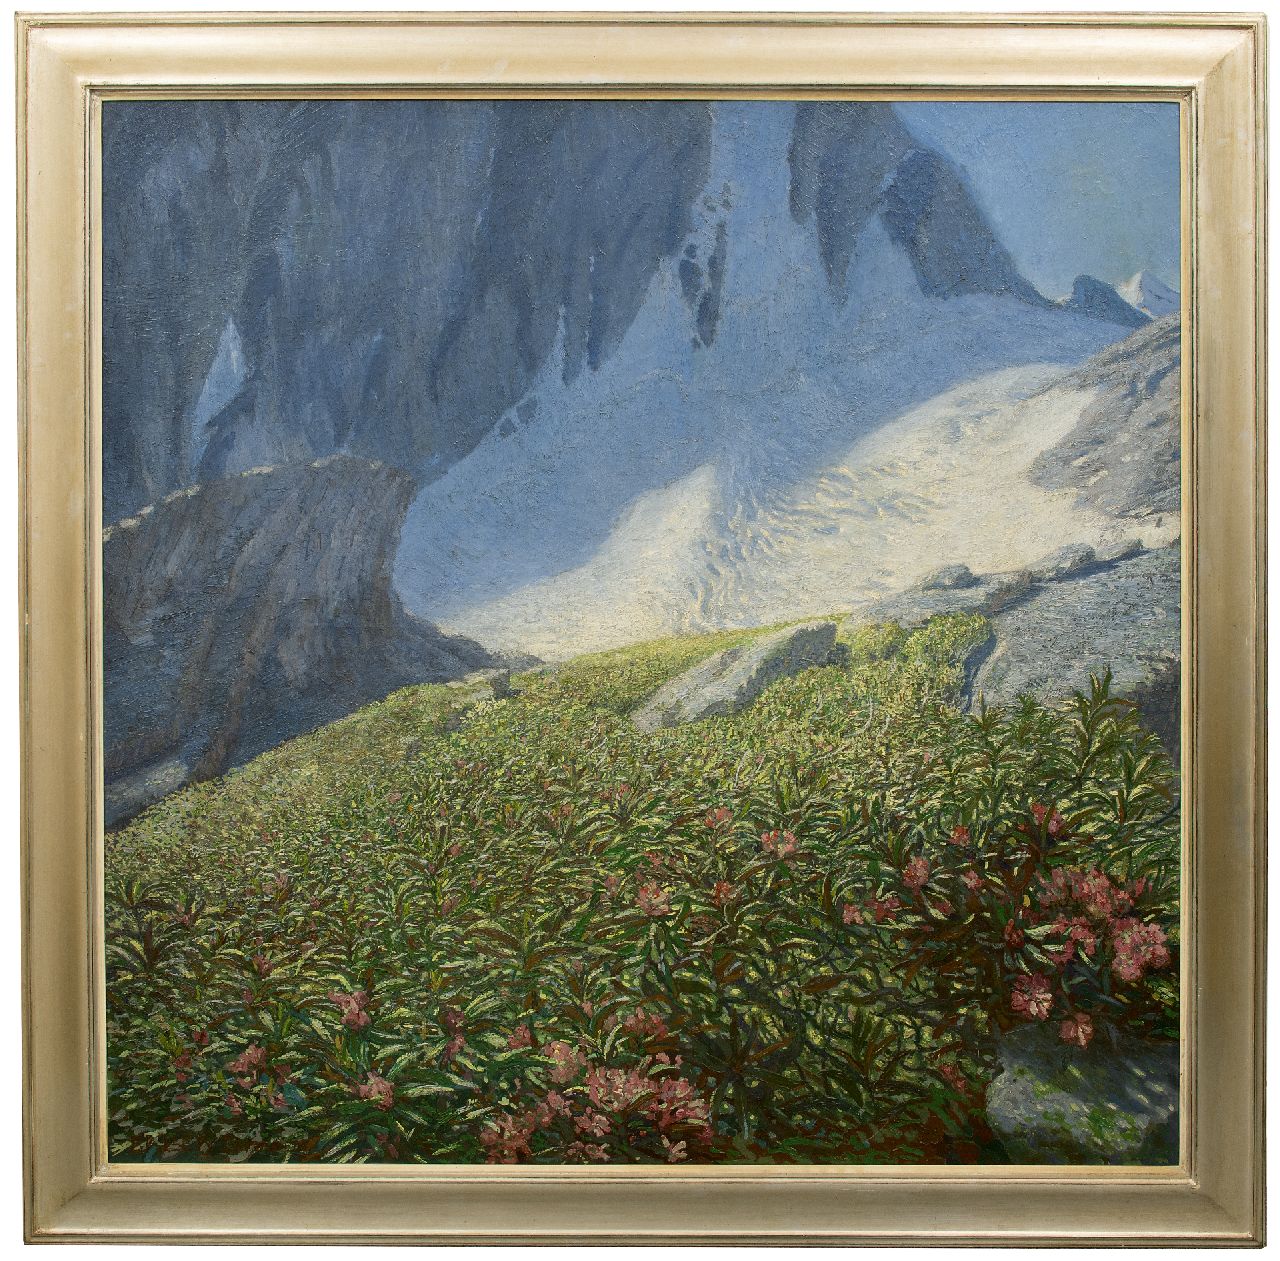 Erler-Samaden E.  | Erich Erler-Samaden | Paintings offered for sale | Flower fields near a glacier, oil on canvas 120.0 x 120.0 cm, signed l.l.